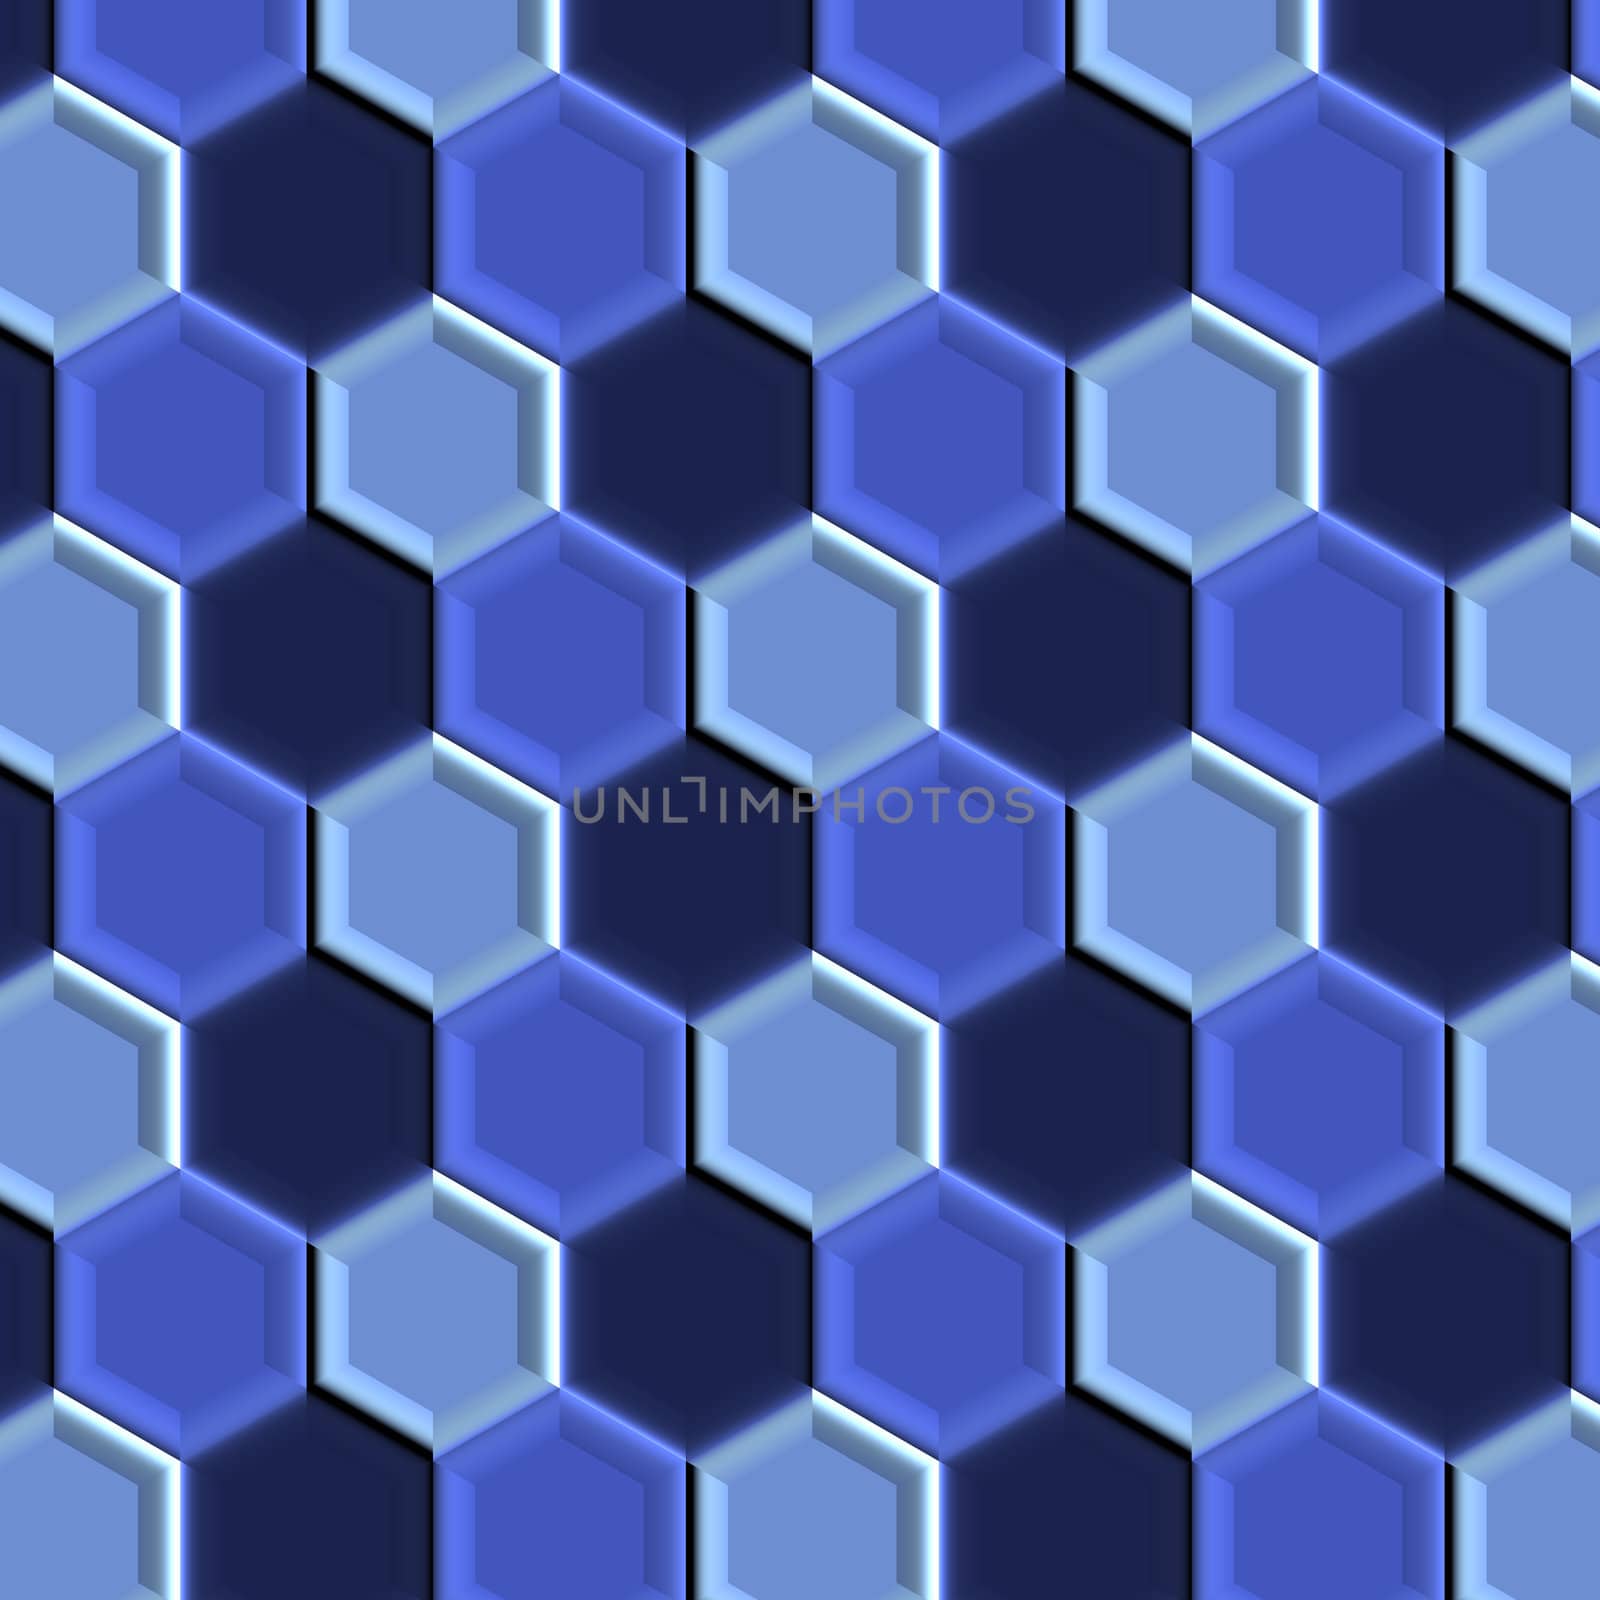 An abstract illustration of hexagonal blue tile.